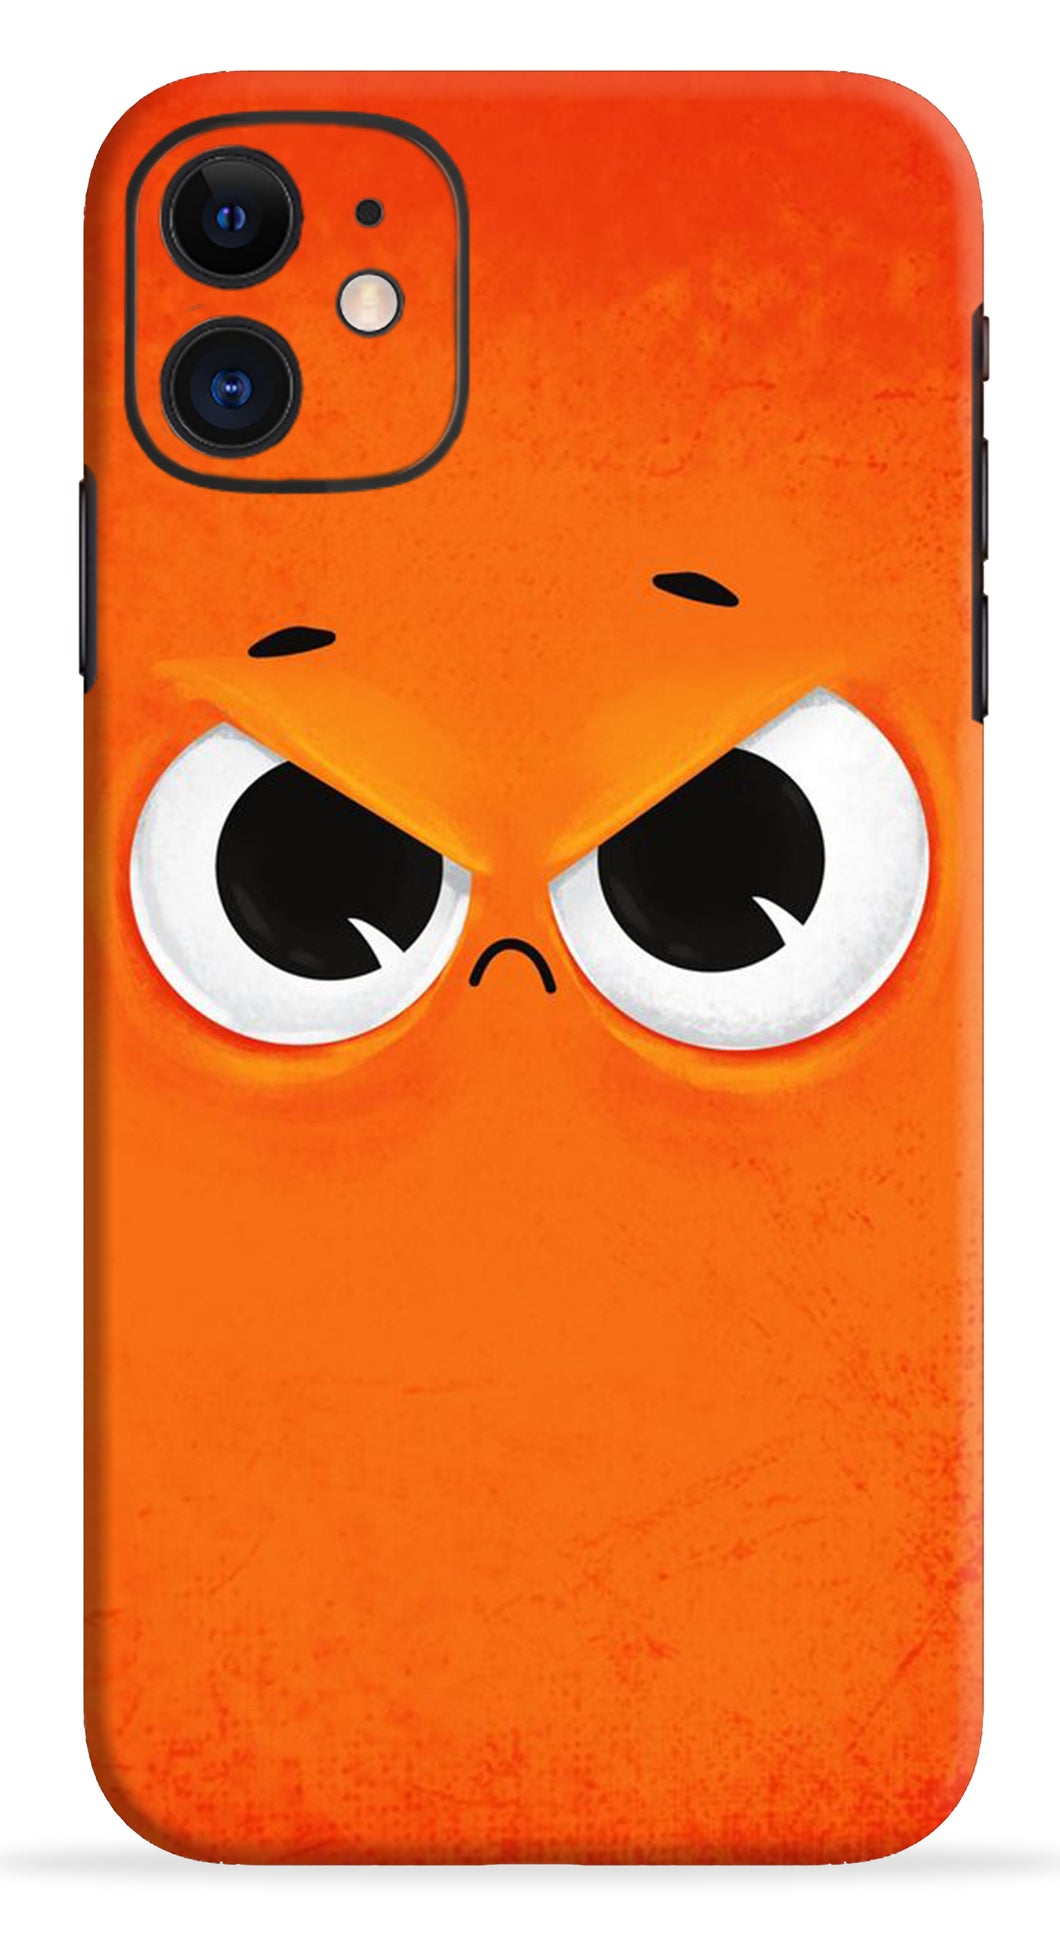 Orange Angry Cartoon Mobile Skin Wrap